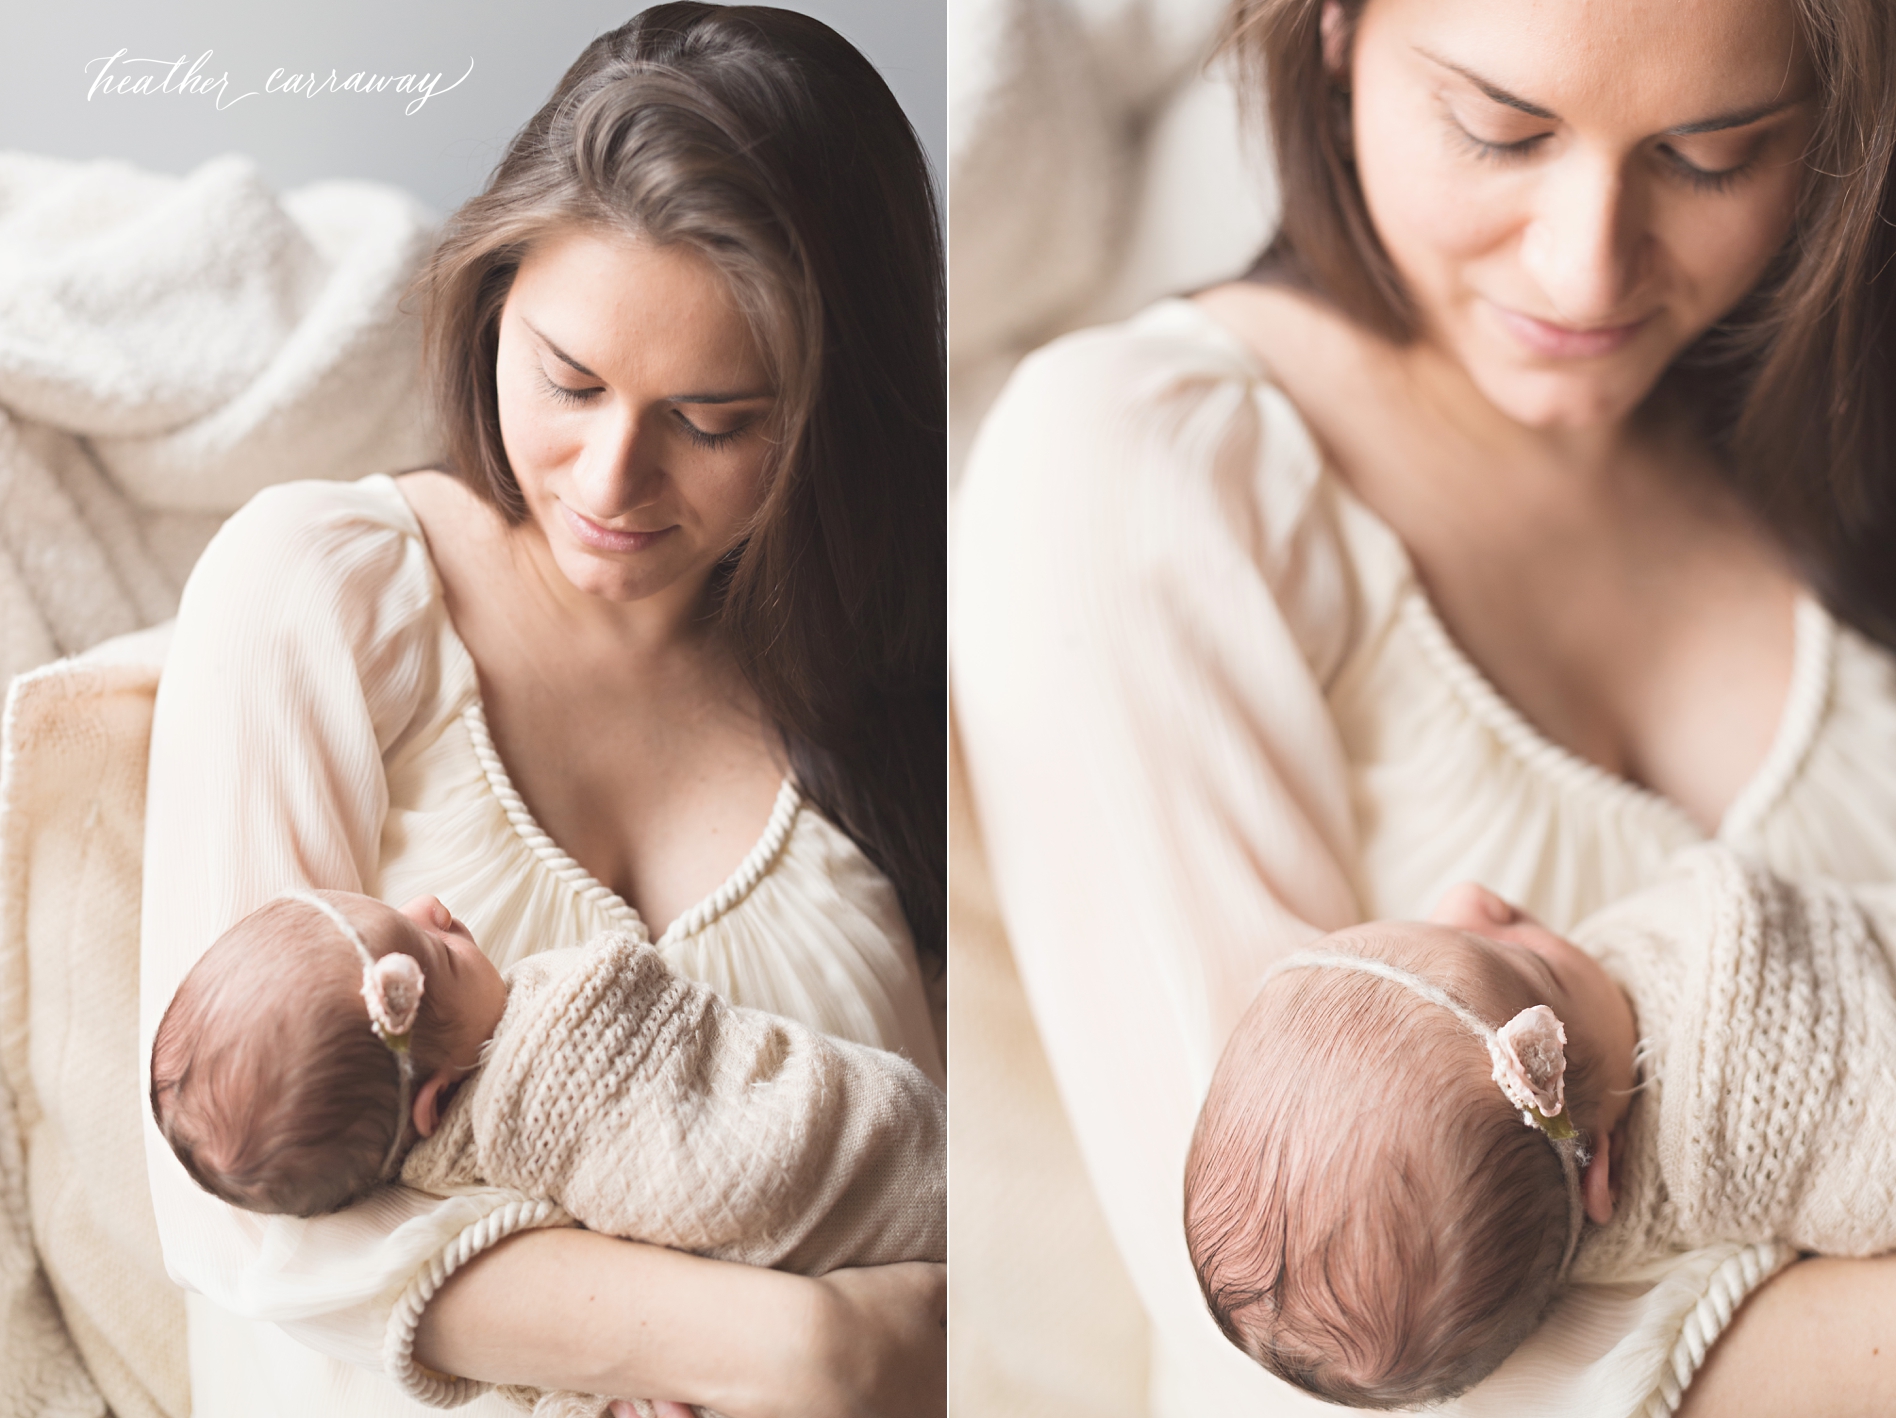 best newborn photographer in atlanta, natural newborn photography, mom and baby newborn photos